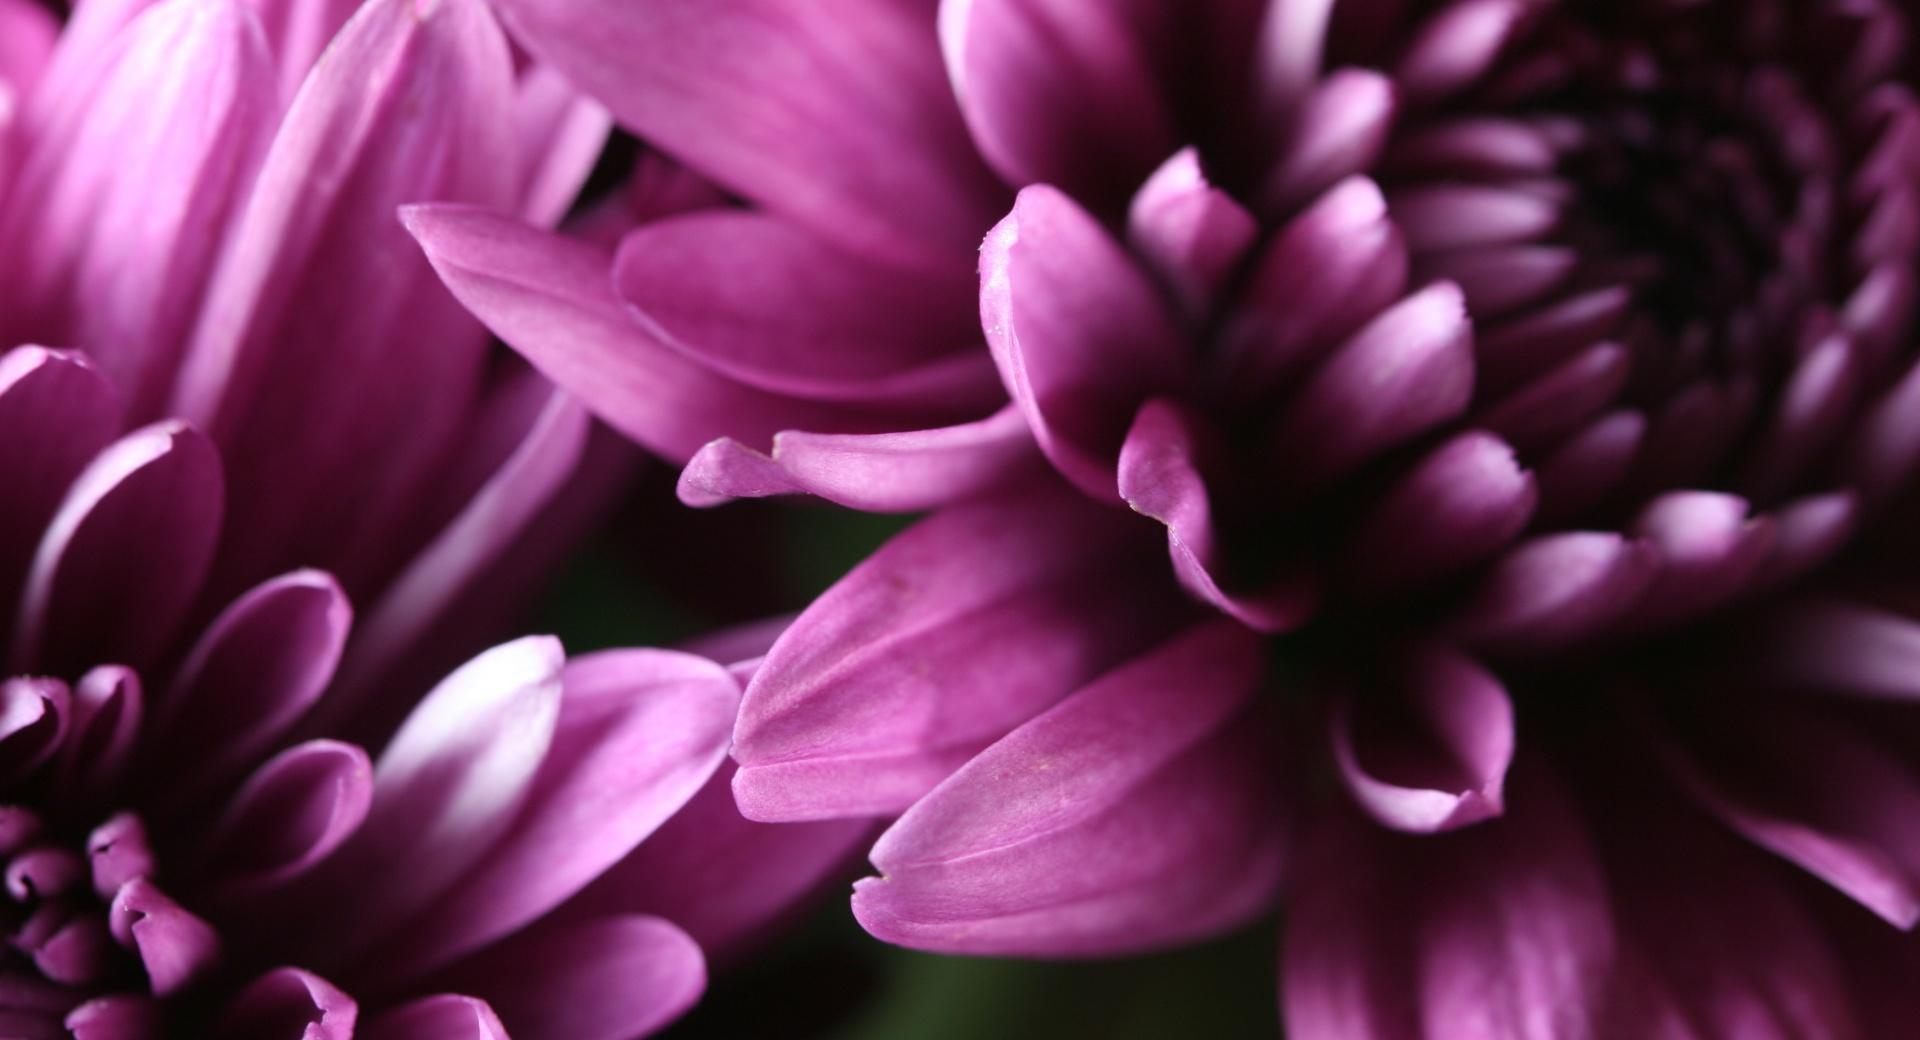 Purple Chrysanthemum at 1024 x 1024 iPad size wallpapers HD quality